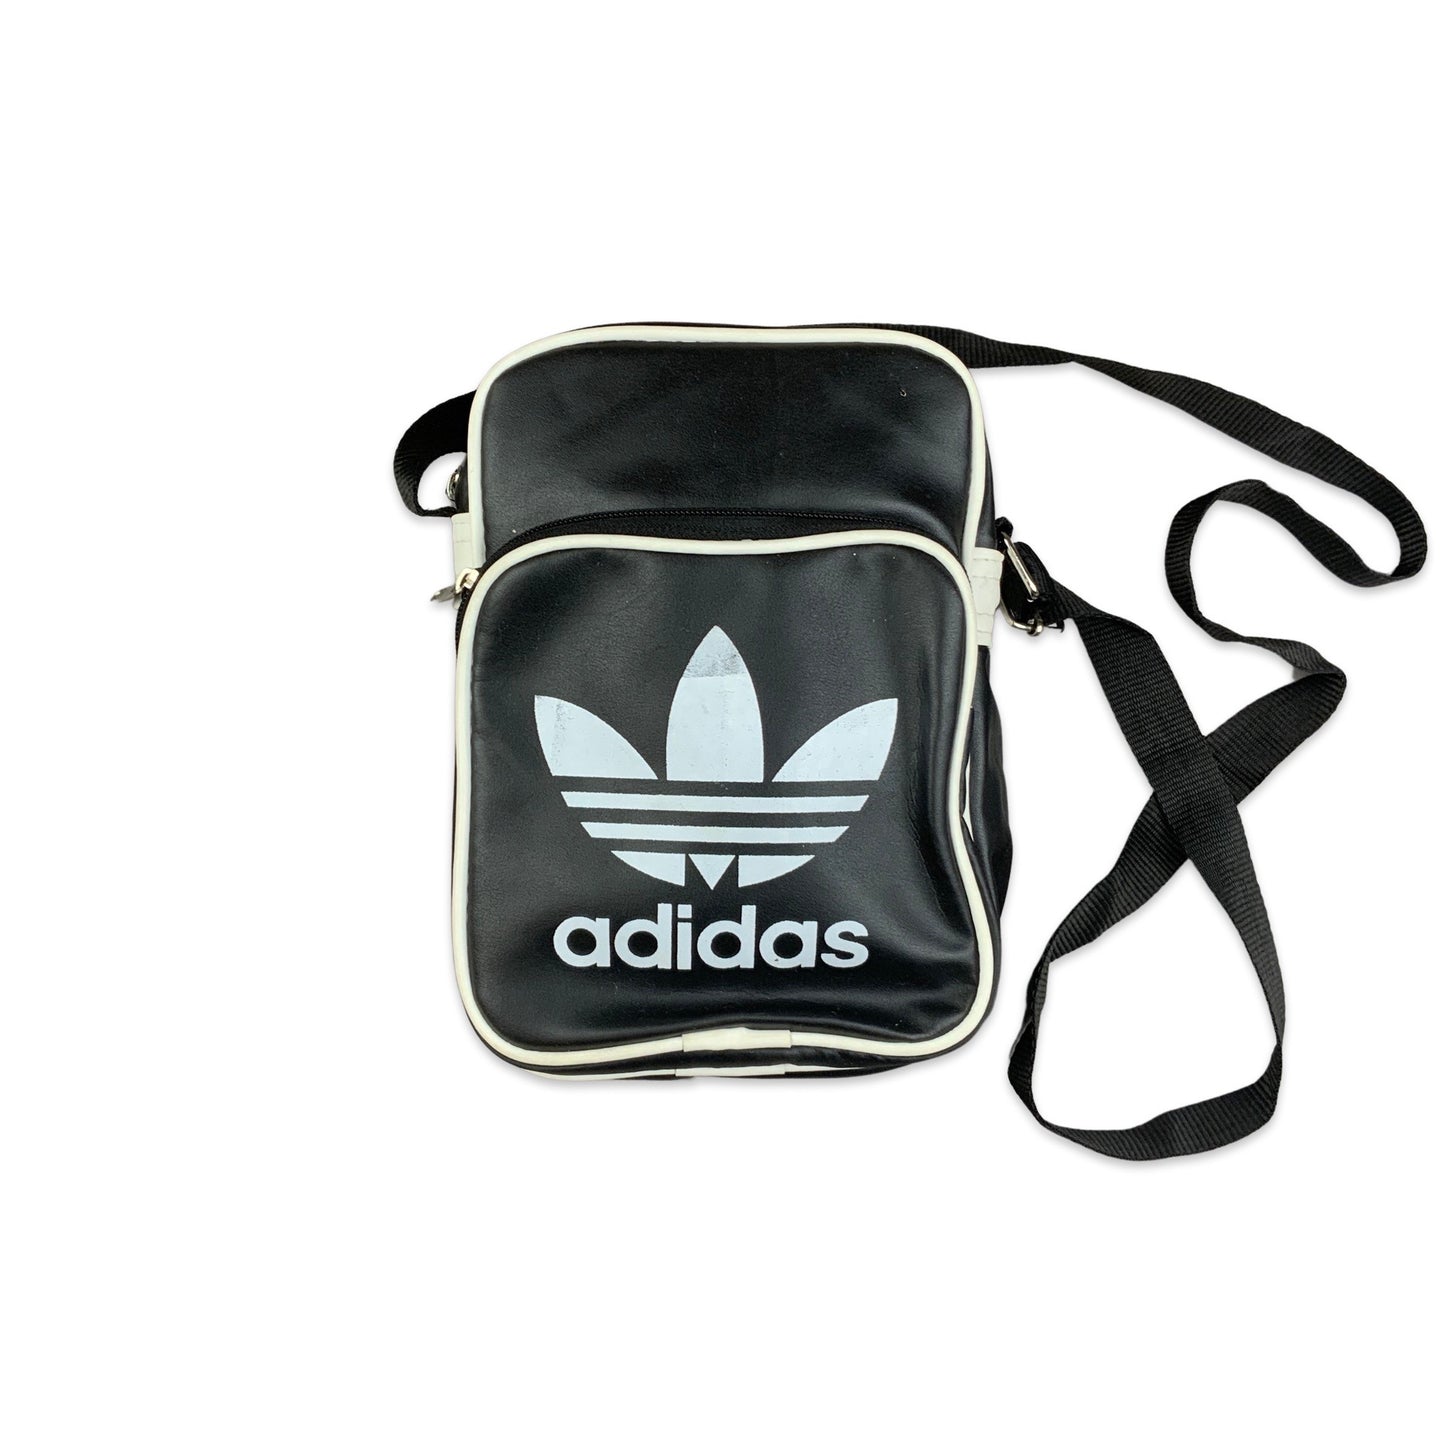 00s Adidas Black and White Sports Crossbody Bag